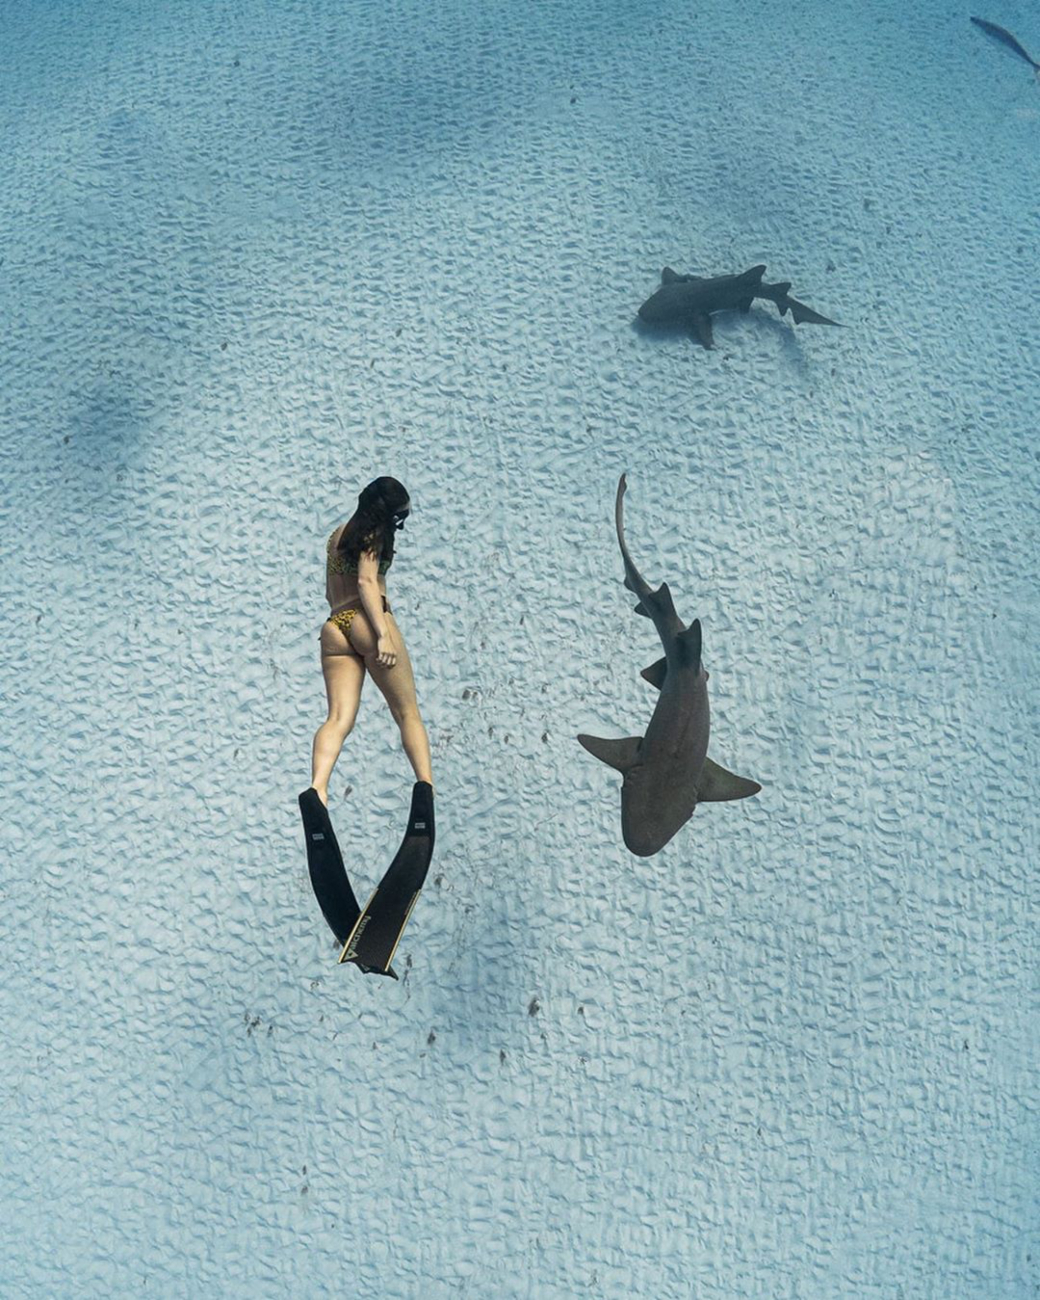 sofia gomez uribe freediving with sharks using alchemy v330 carbon fins